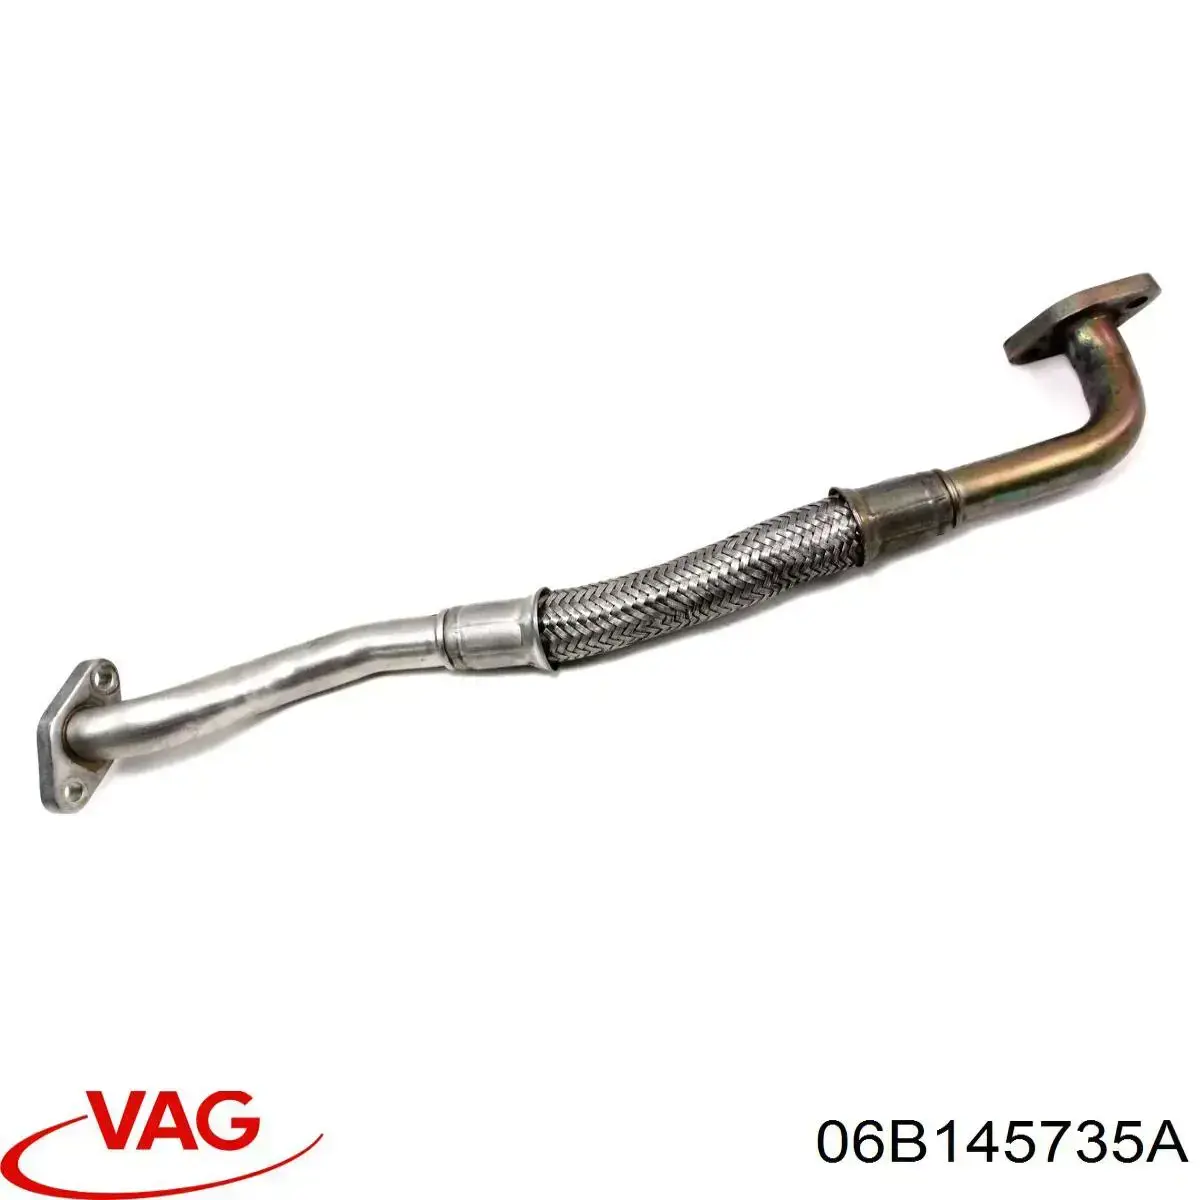 06B145735A VAG tubo (manguera Para Drenar El Aceite De Una Turbina)